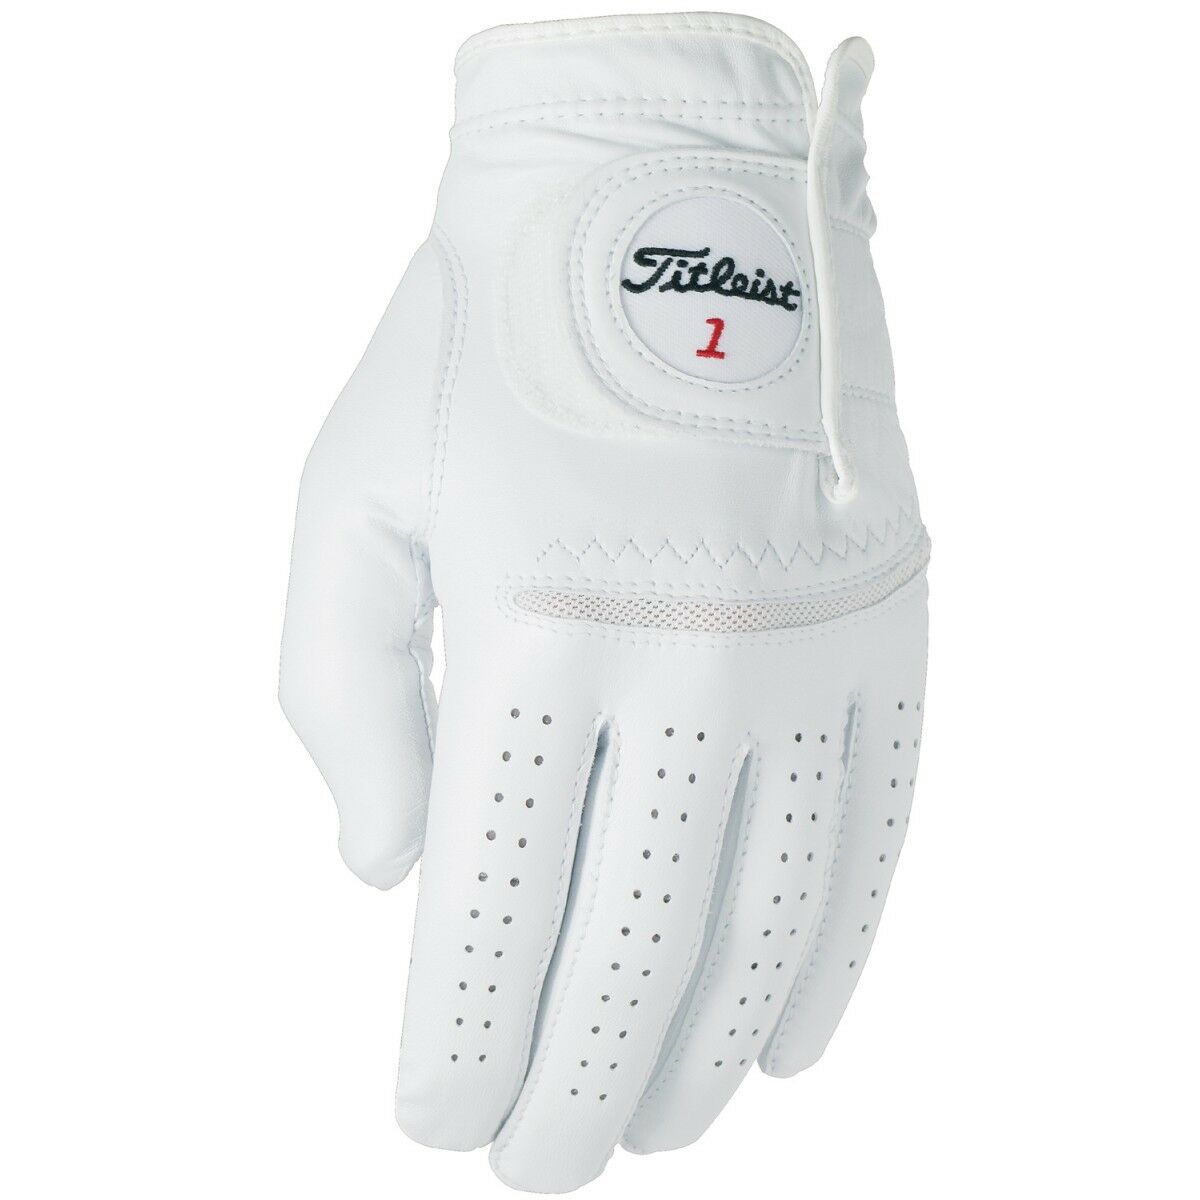 New Titleist Perma Soft Gloves Lh Glove ( For Rh Swinger) 2019 Series